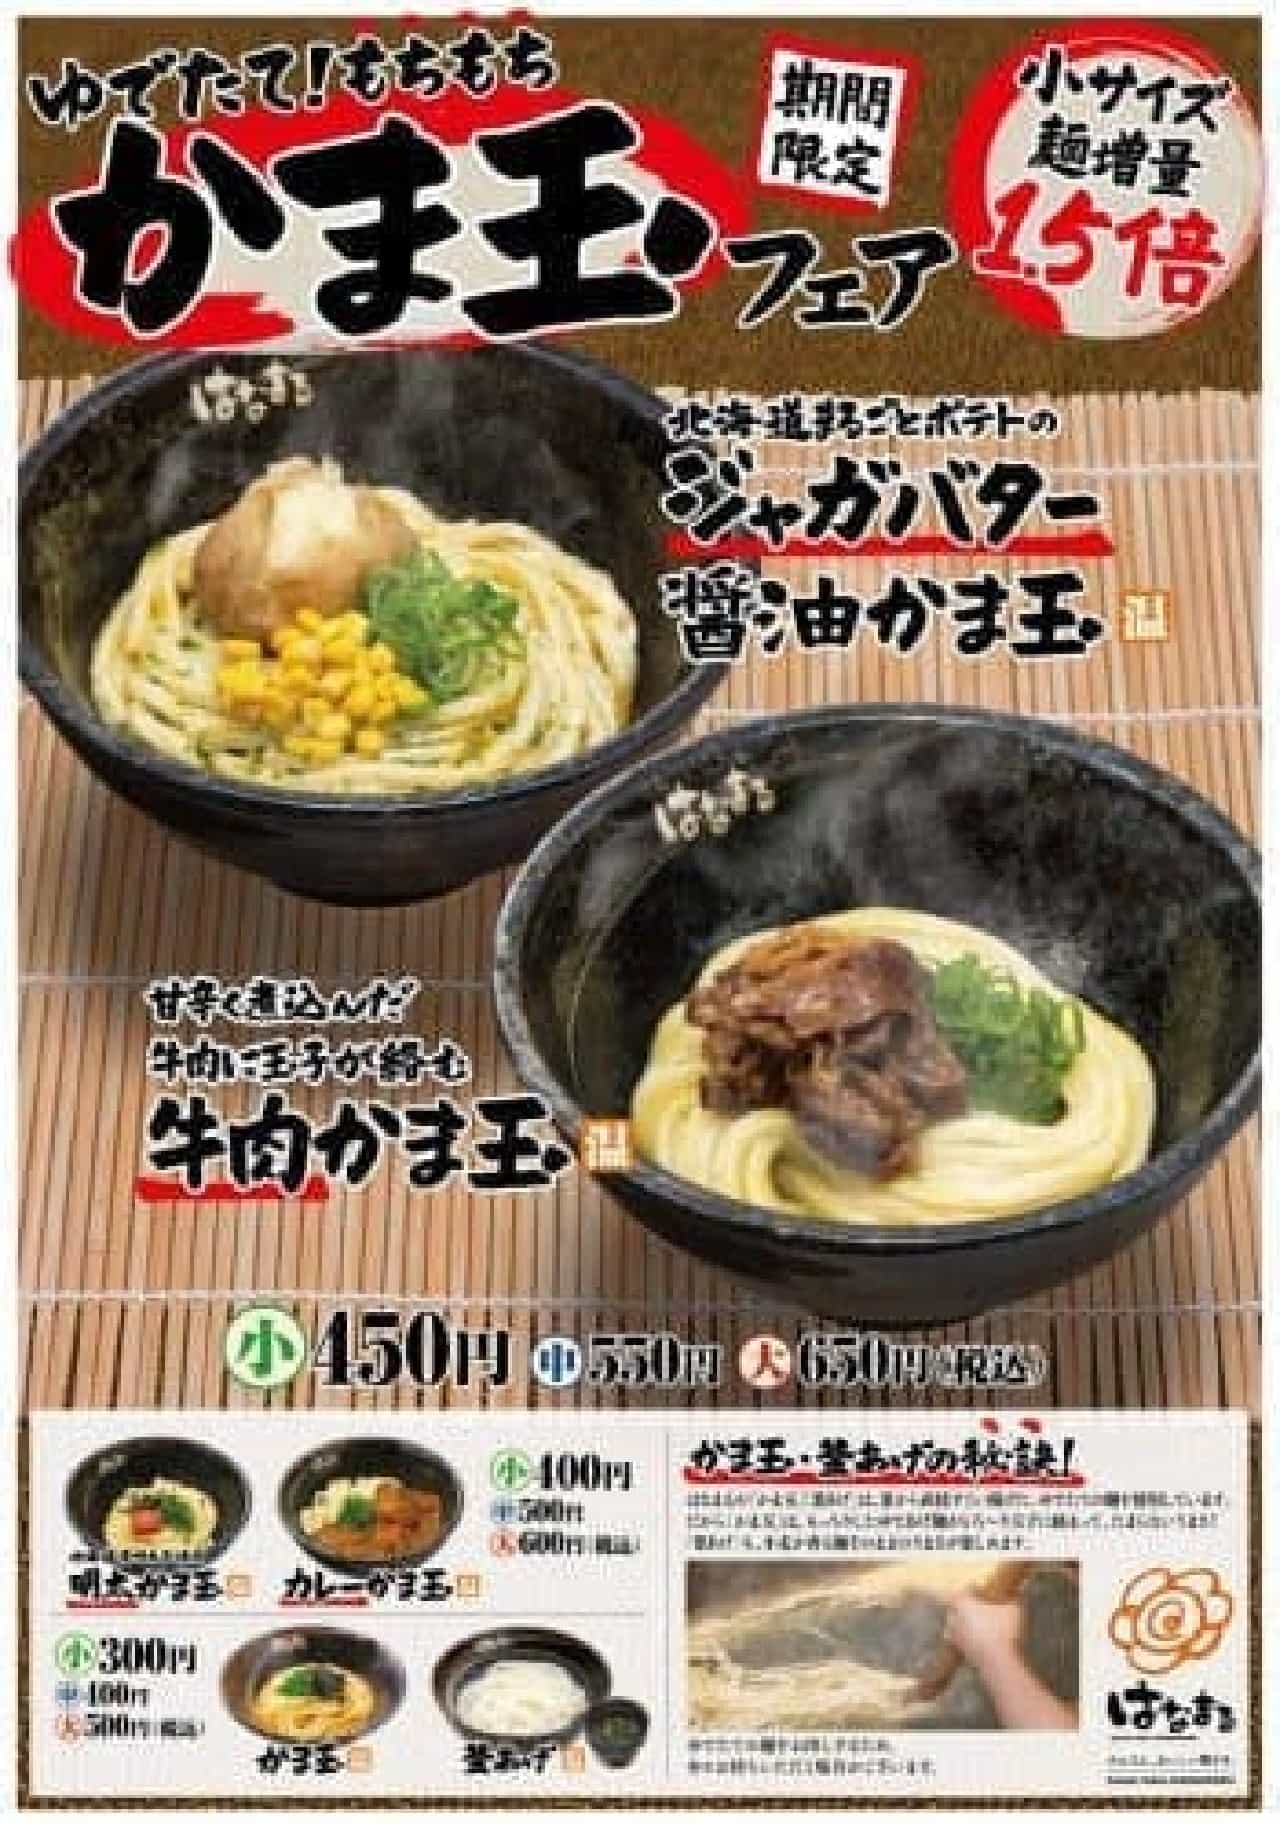 Don't forget the regular "Kamatama" menu!